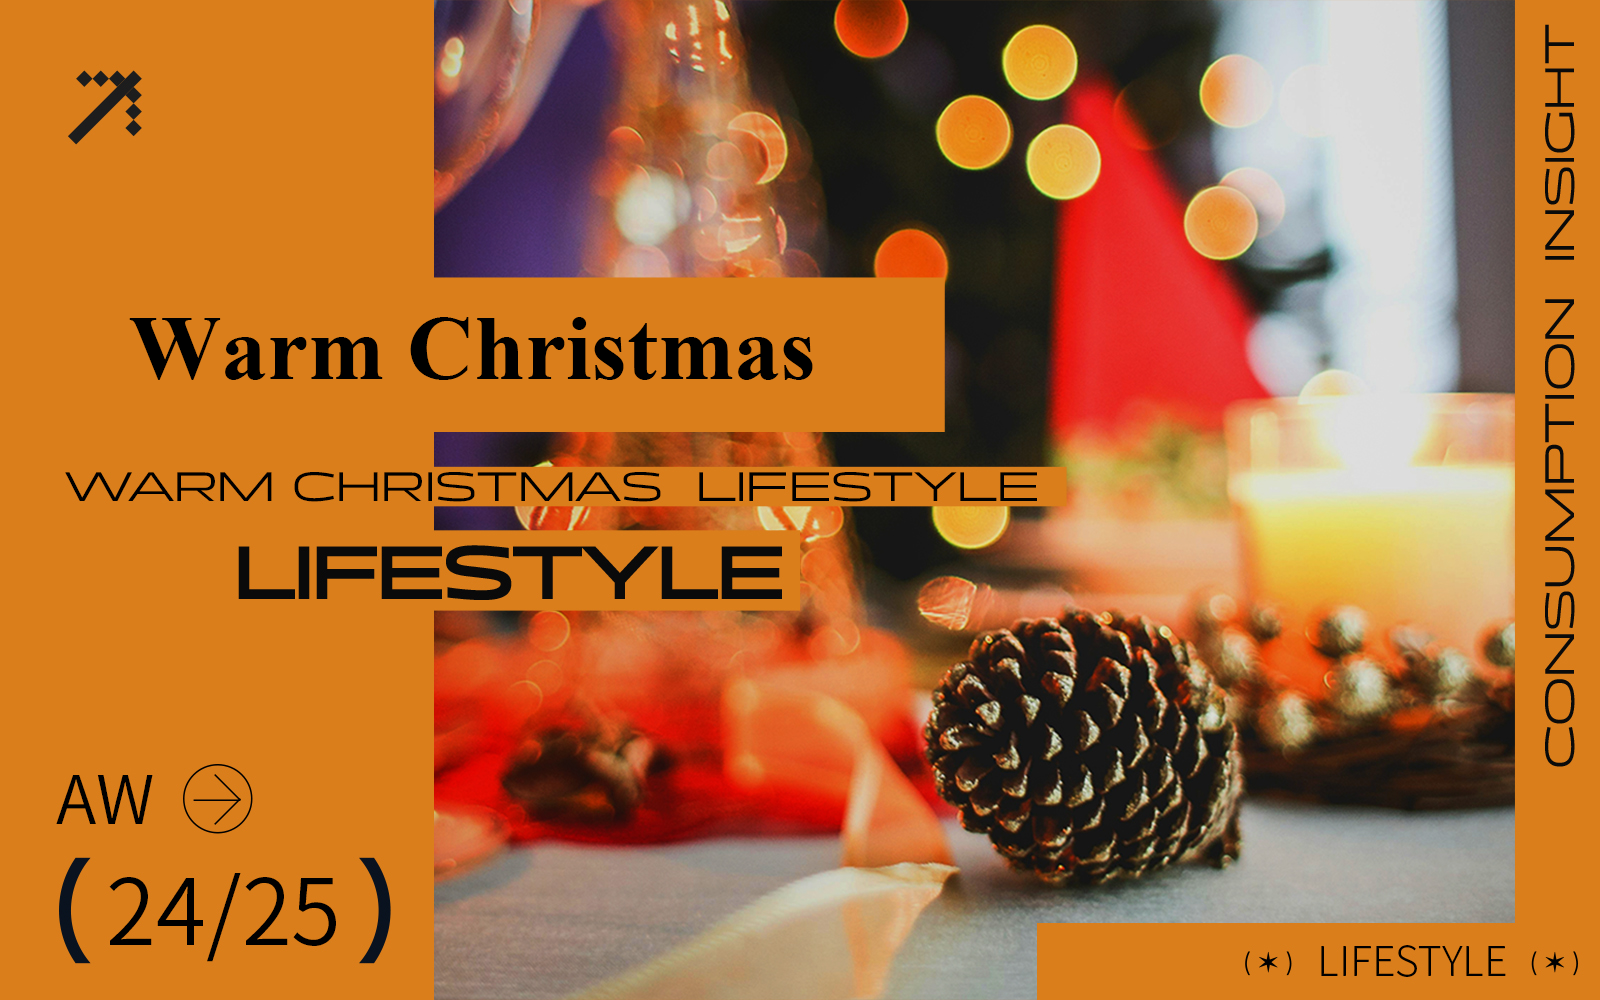 Warm Christmas -- A/W 24/25 Lifestyle Prediction